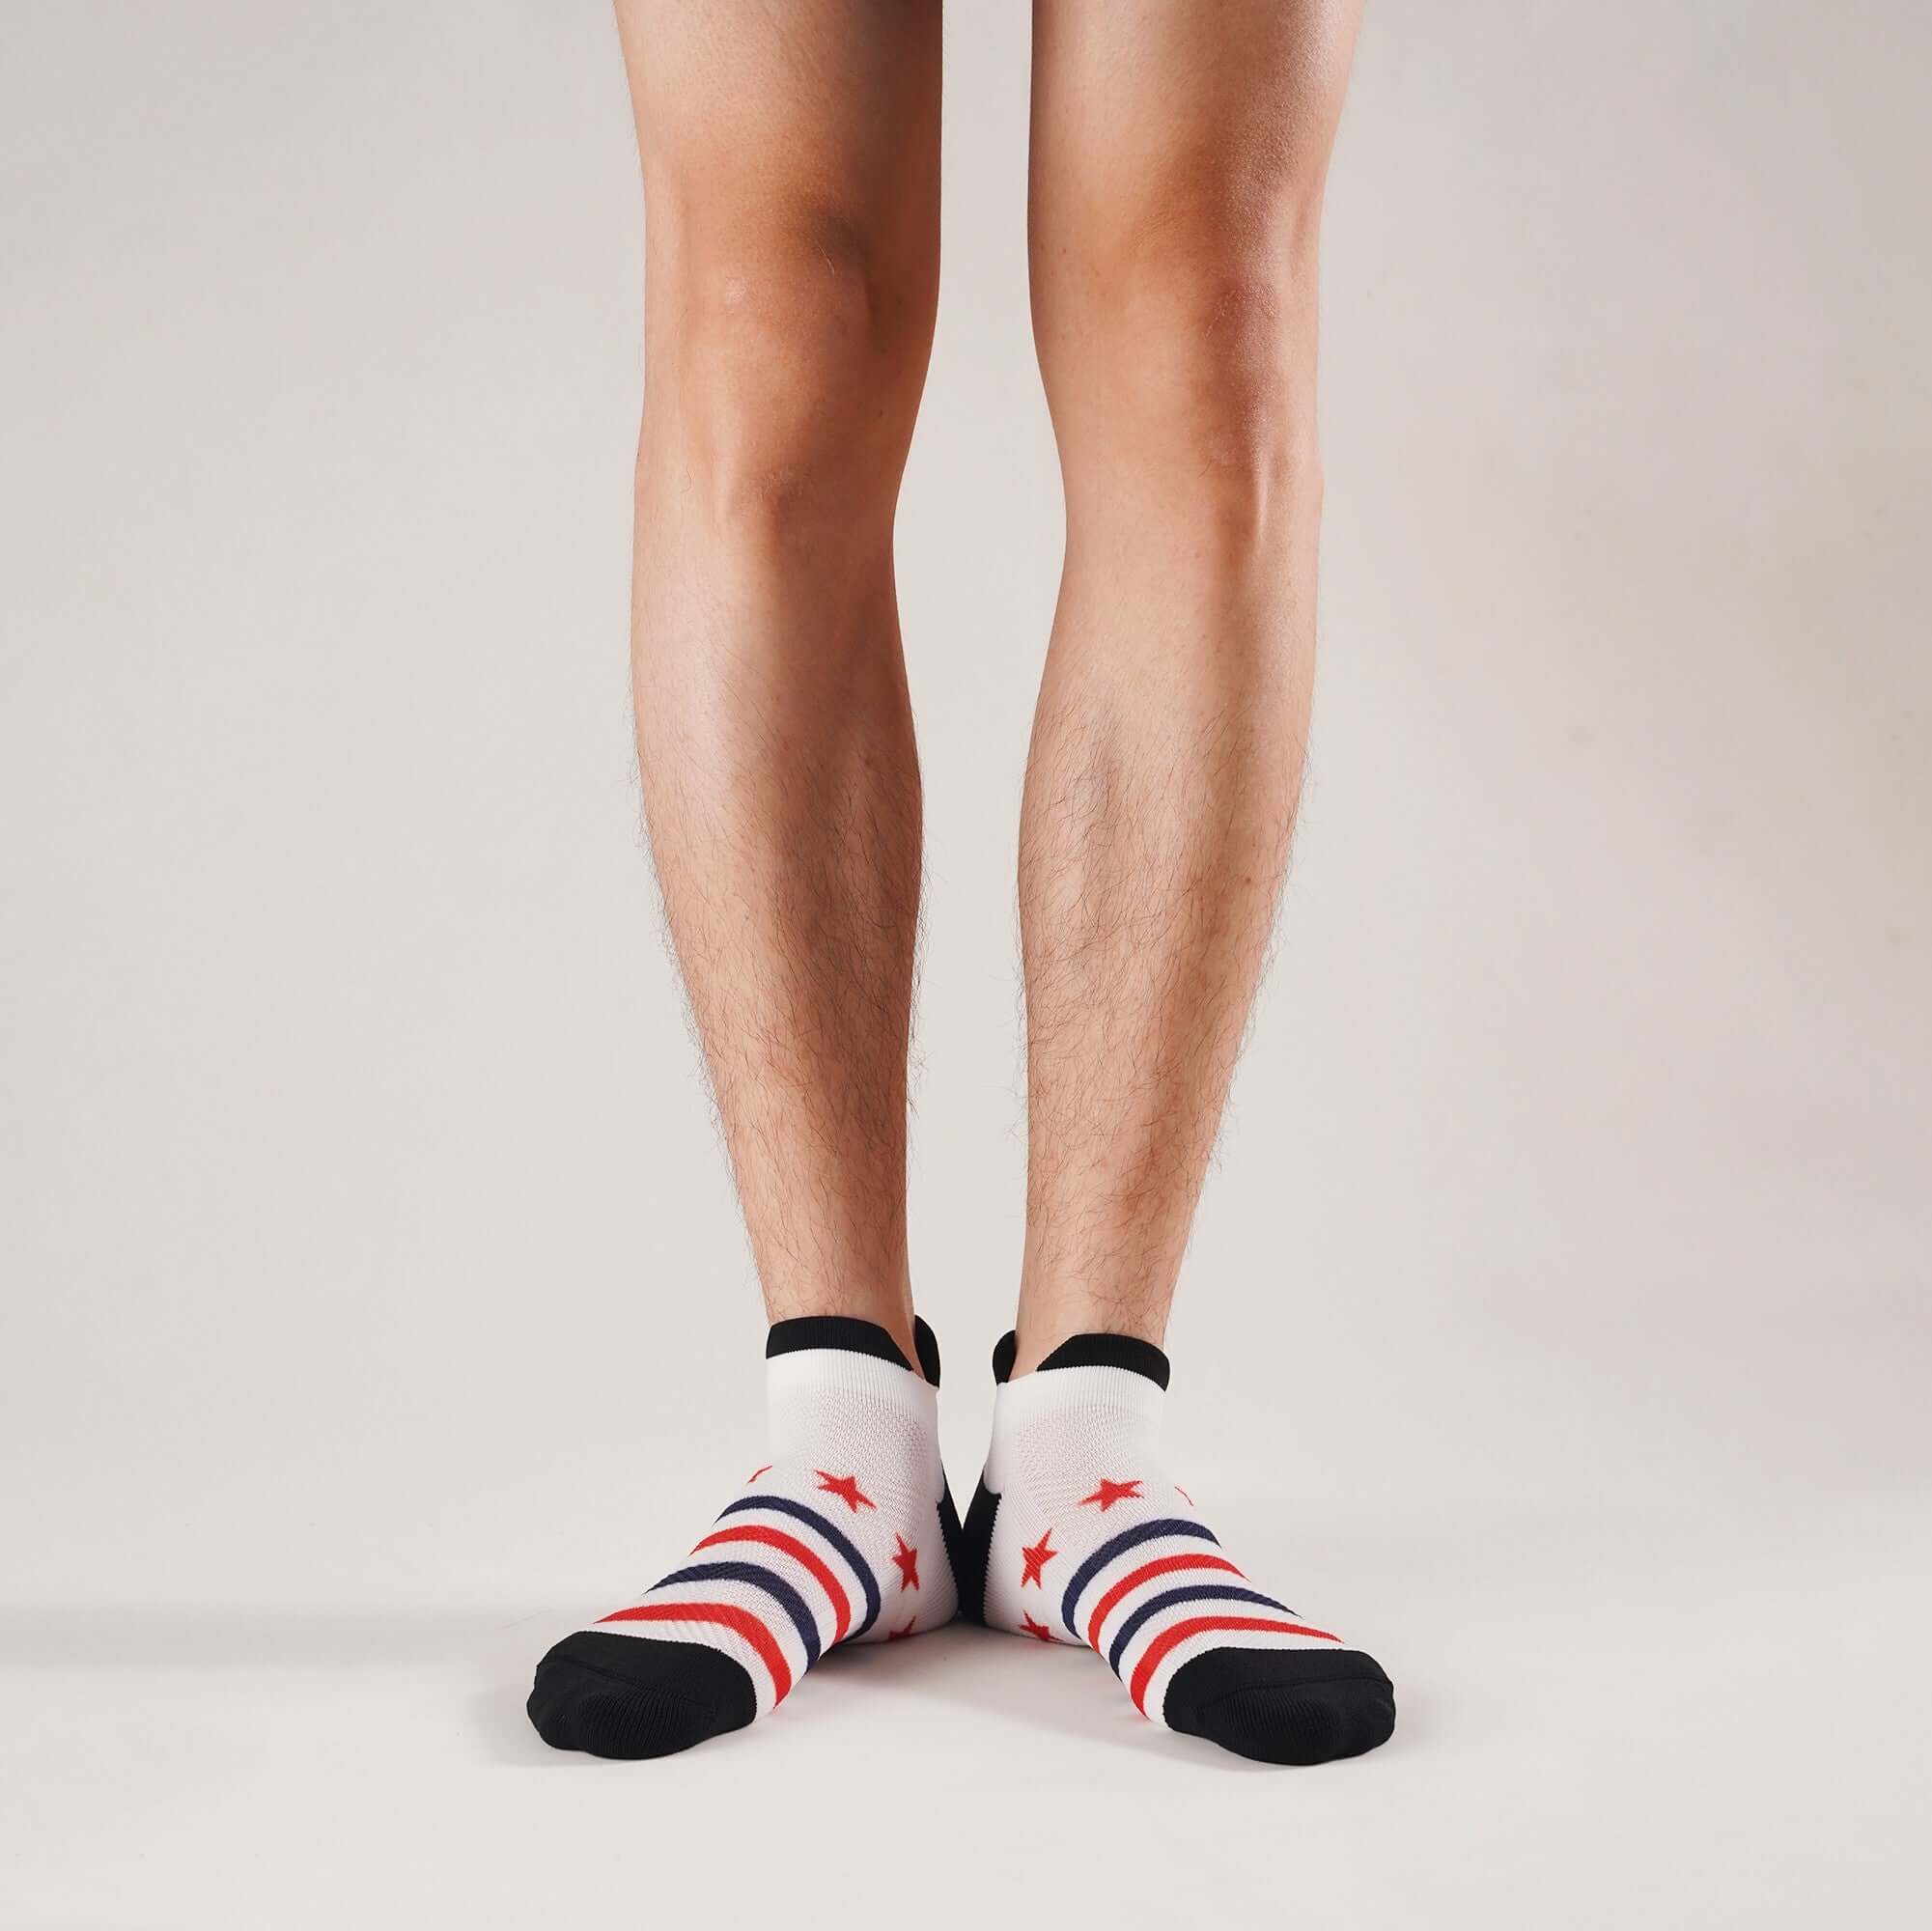 USA American Flag Socks Patriotic No Show Socks for Men/Women Striped Stars Socks Gift, 4 Pack - md-diab